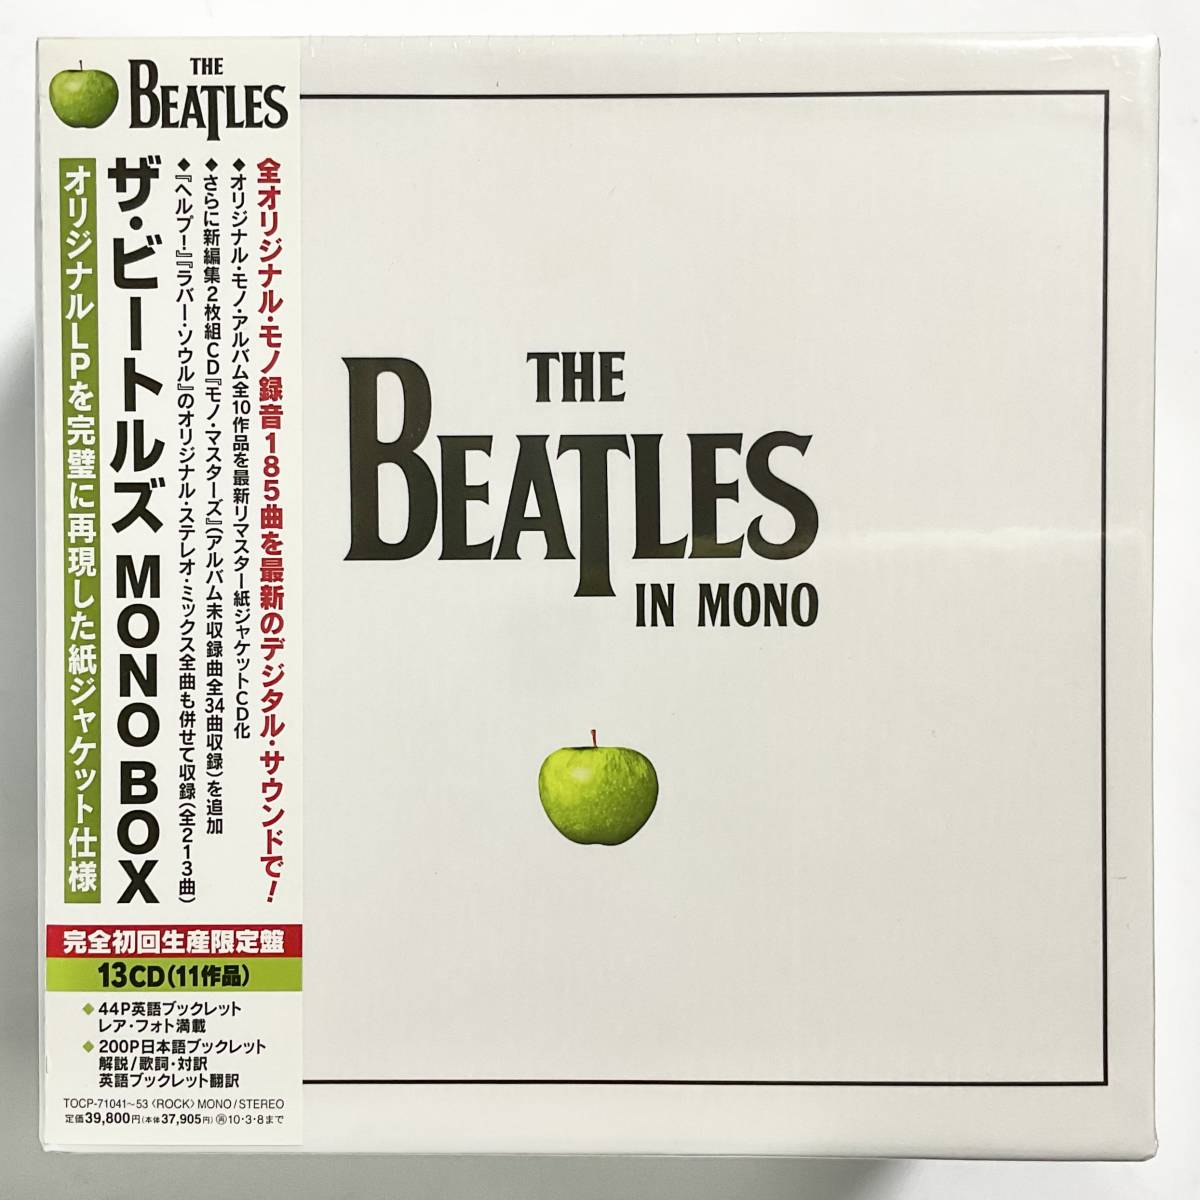 The Beatles ザ・ビートルズ MONO BOX 初回限定盤 - 洋楽